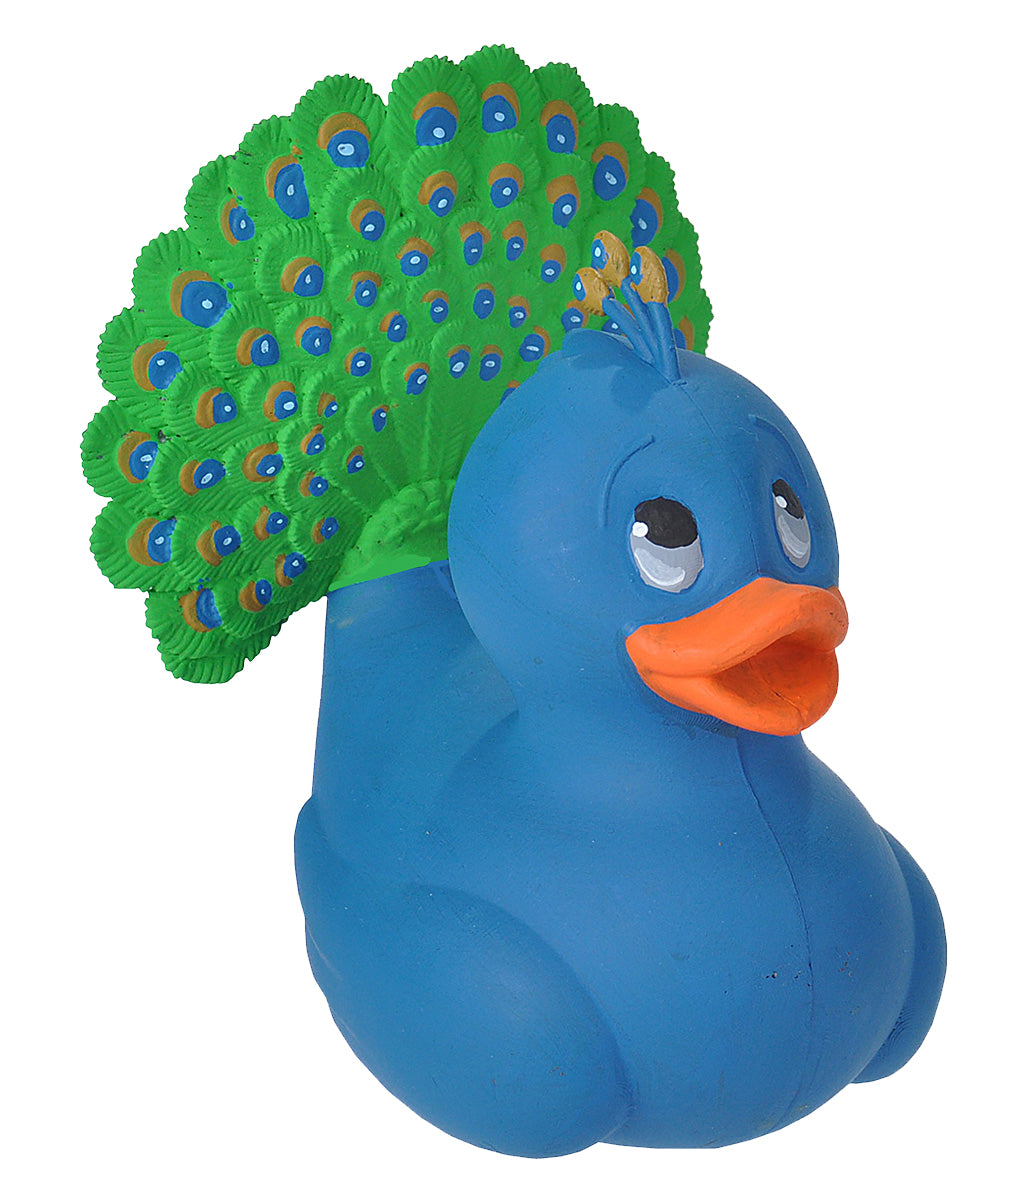 Peacock Duck.